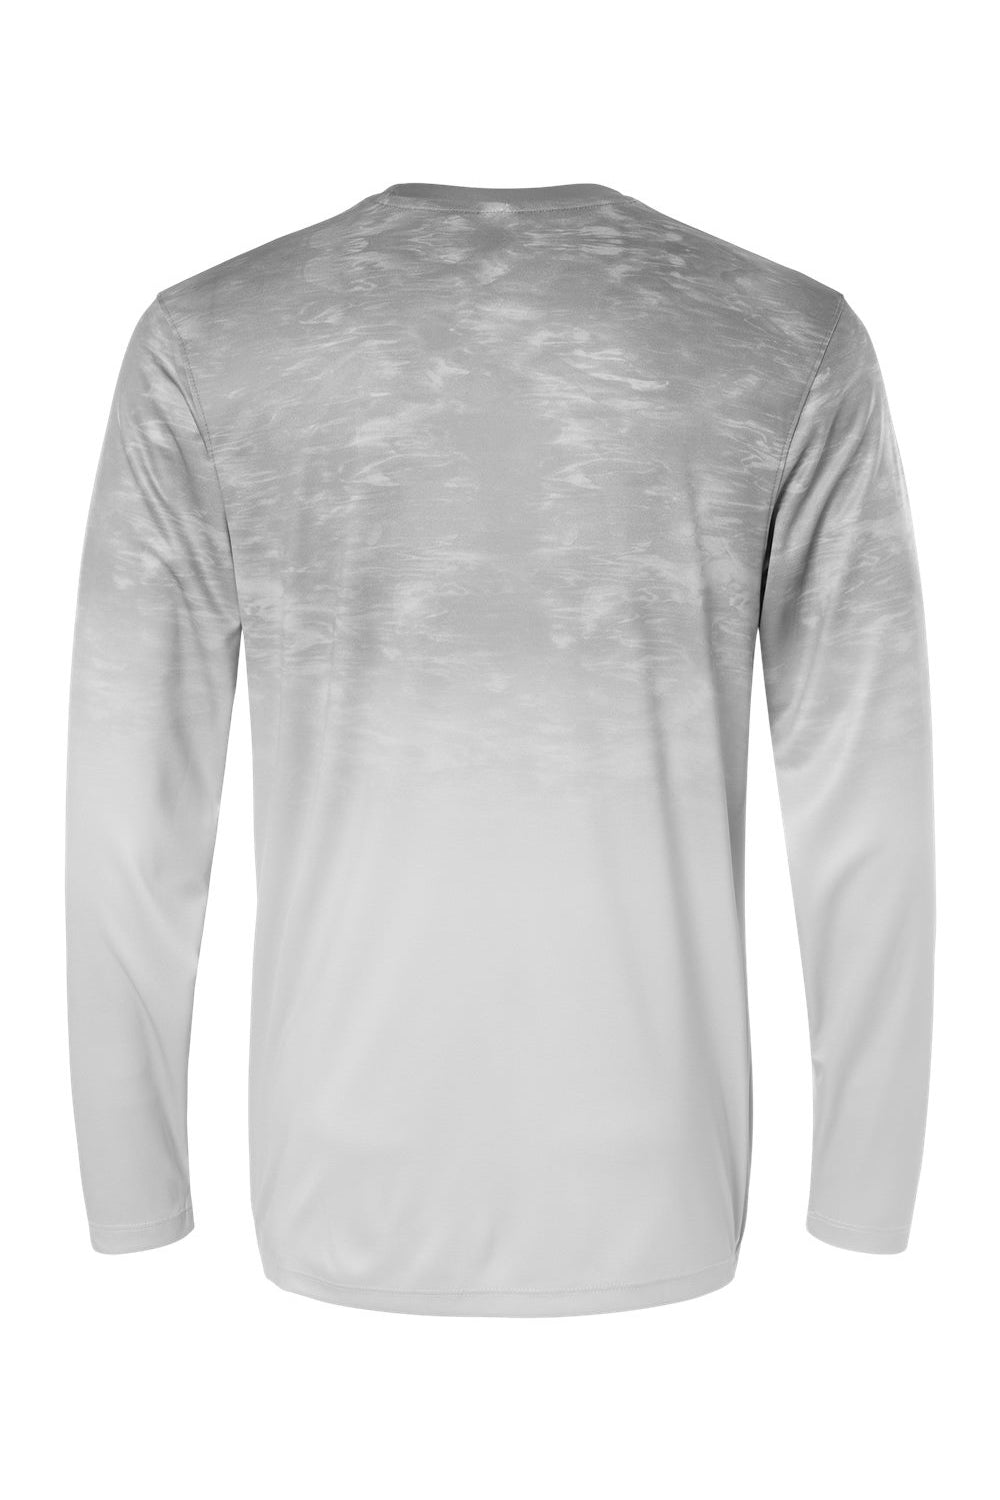 Paragon 229 Mens Montauk Oceanic Fade Performance Long Sleeve Crewneck T-Shirt Aluminum Grey Flat Back